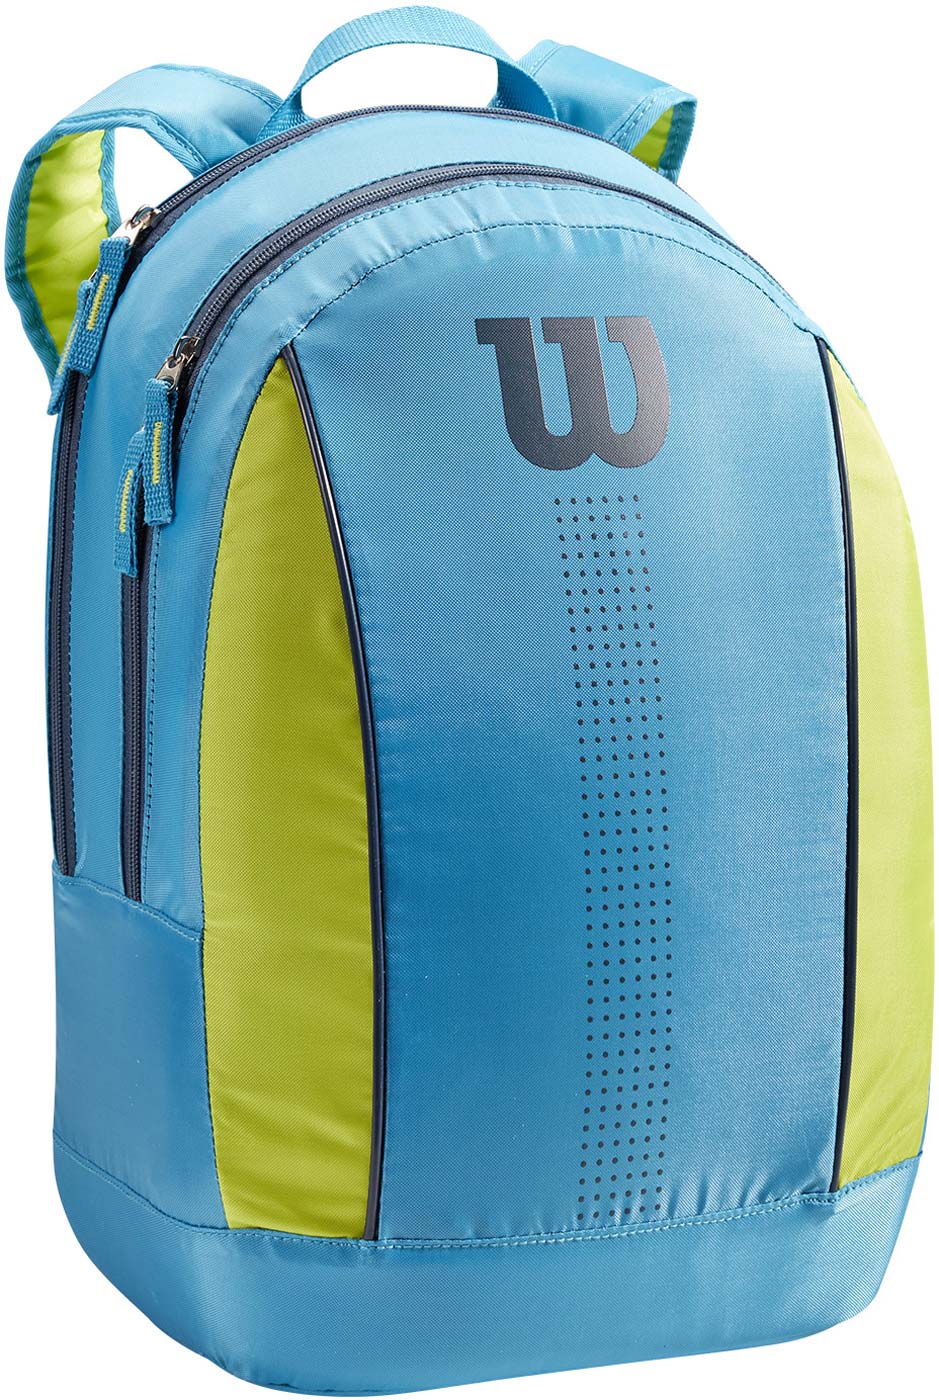 Junior tennis backpack